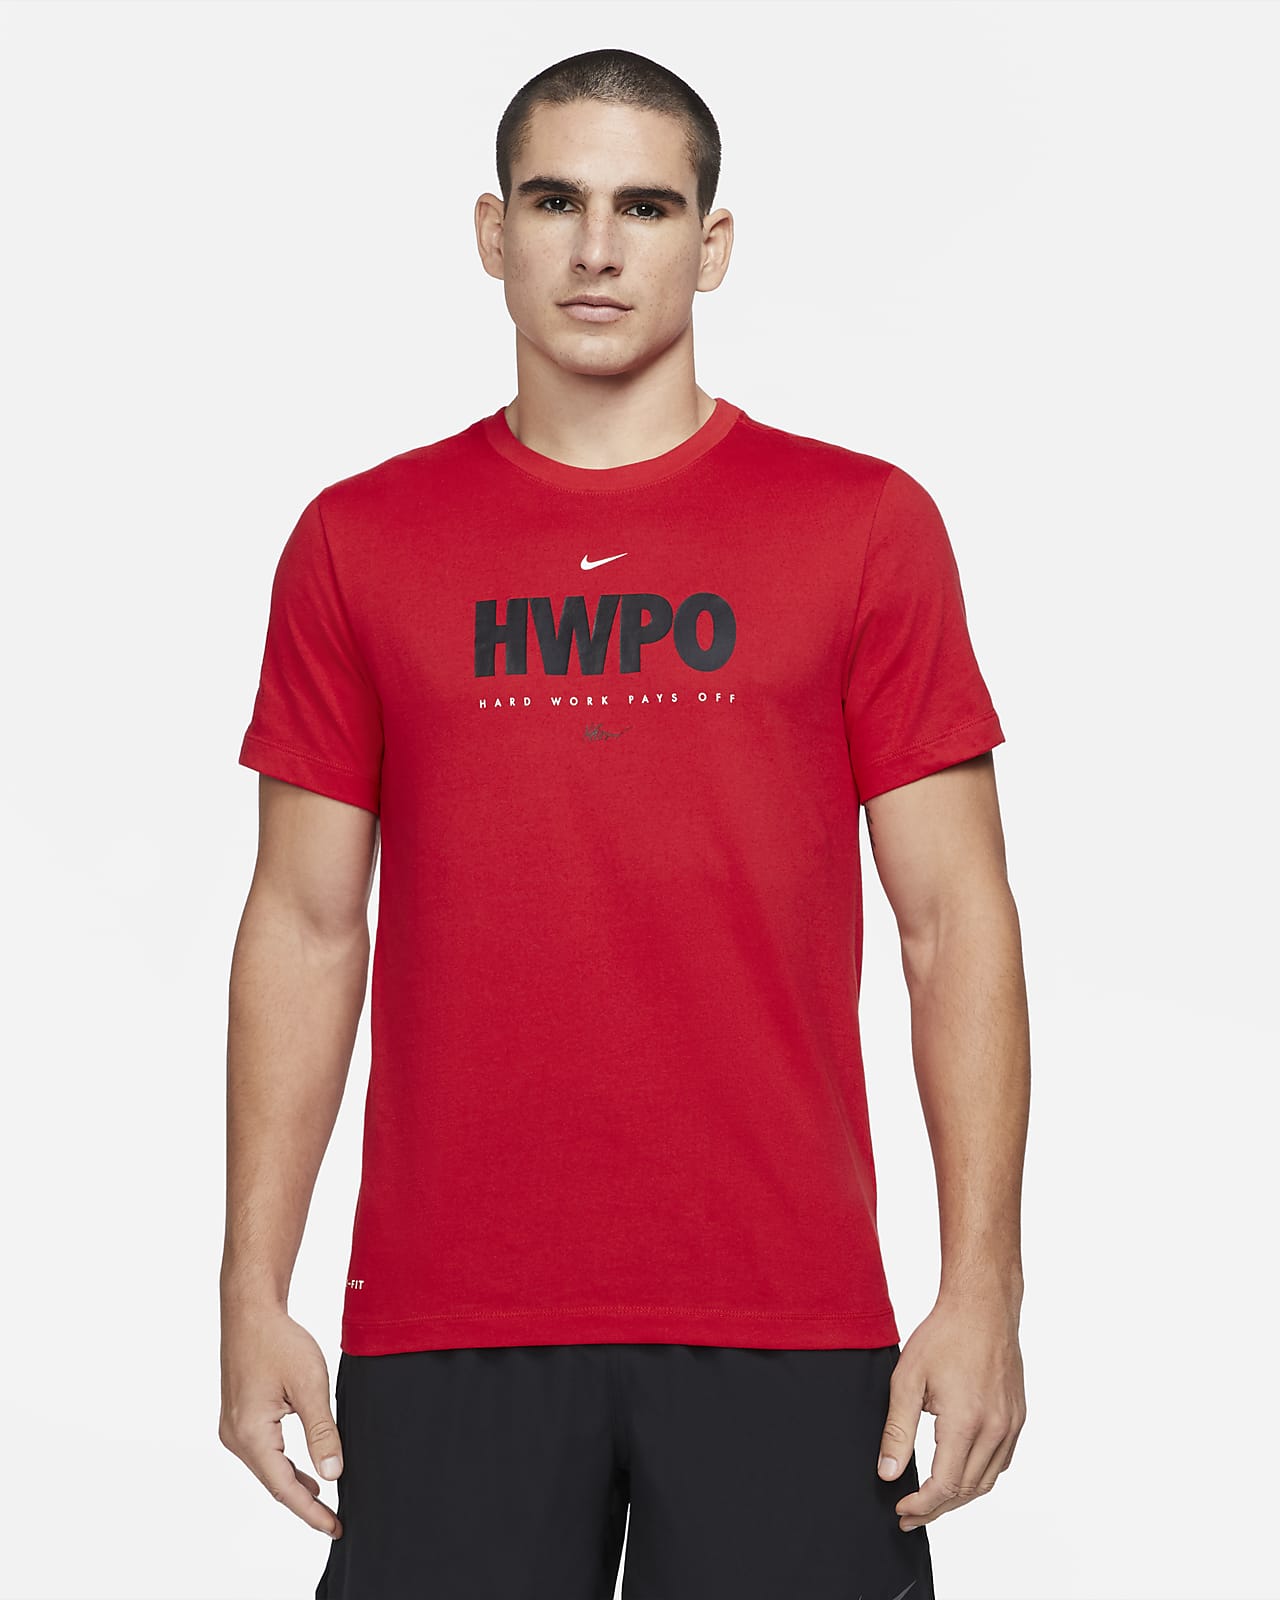 Dri-FIT "HWPO" Training T-Shirt. Nike.com